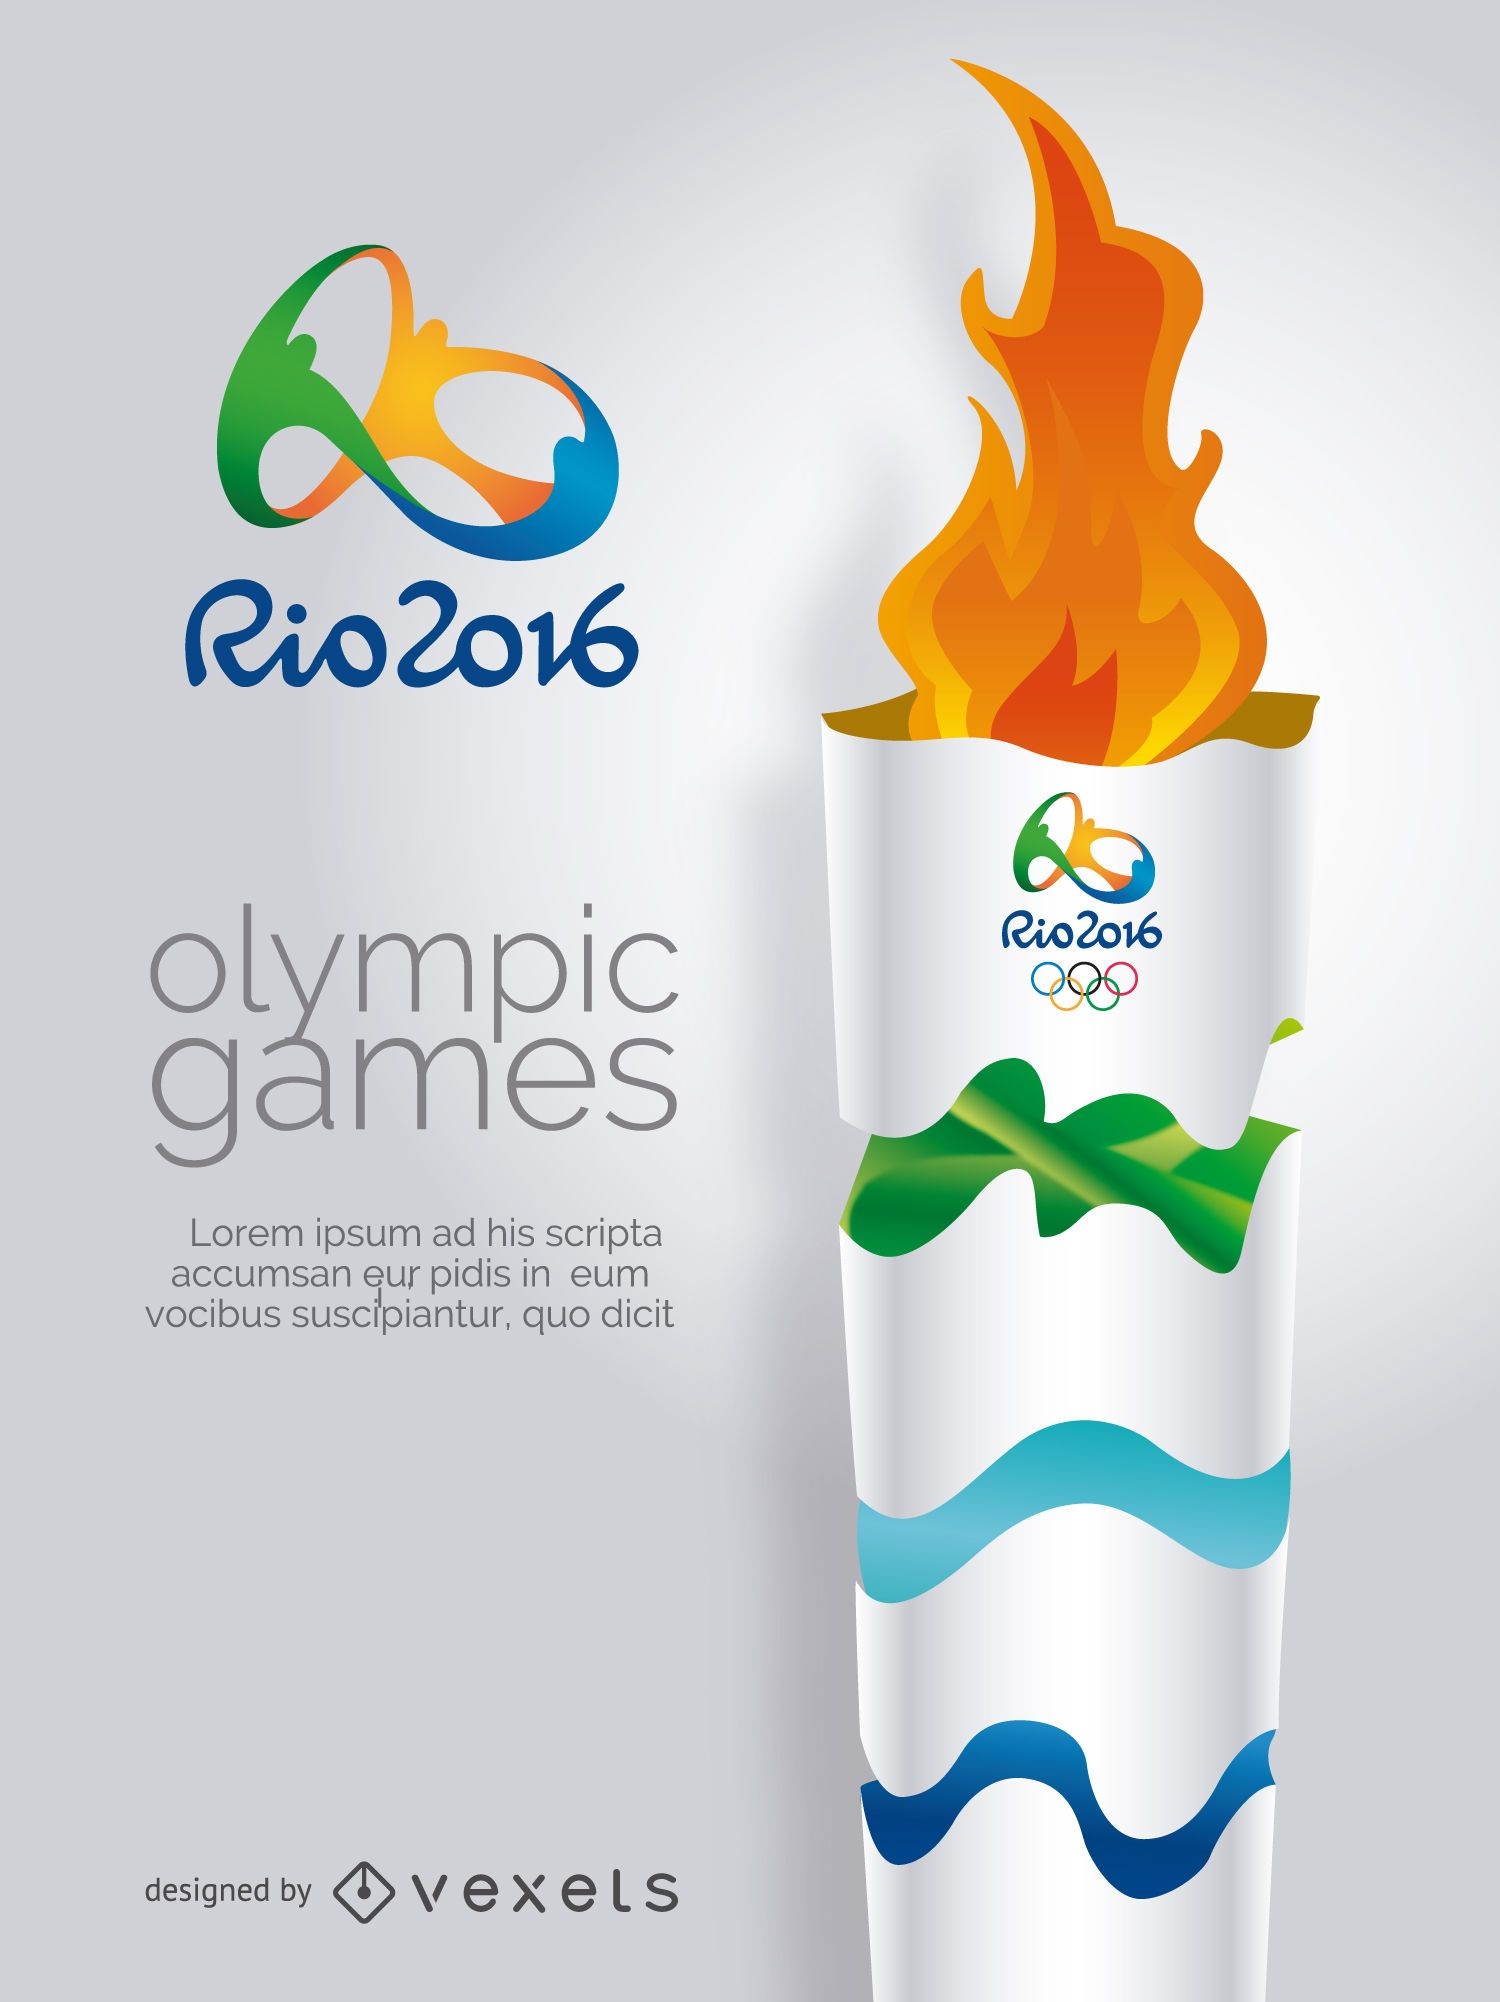 Jogos Ol?mpicos Rio 2016 - Tocha Ol?mpica